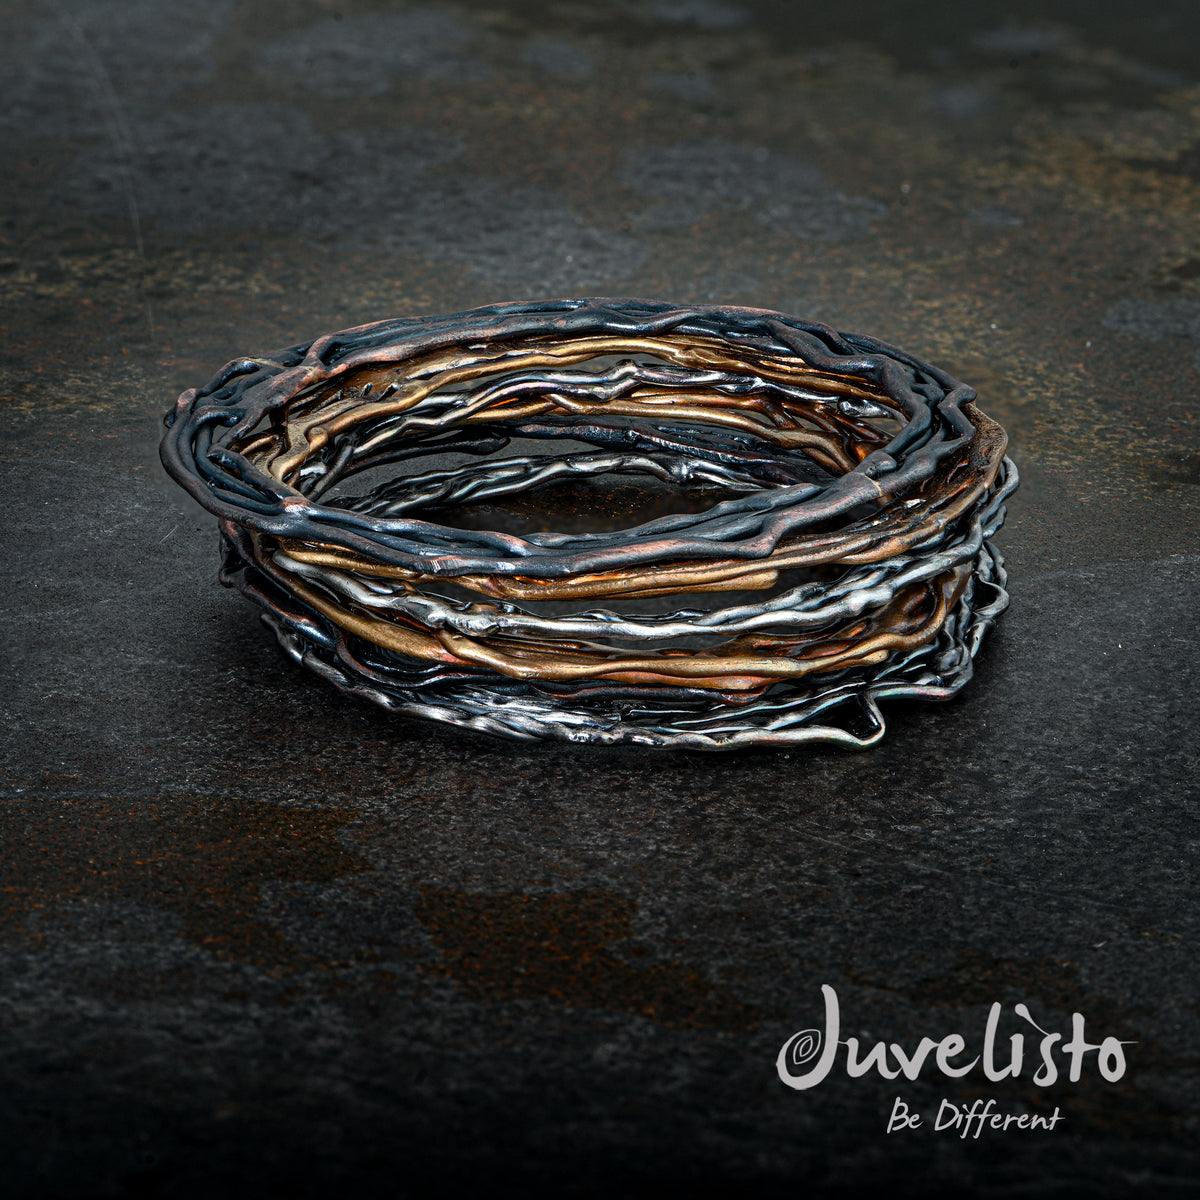 Juvelisto Design | Wavy Organic Bracelets